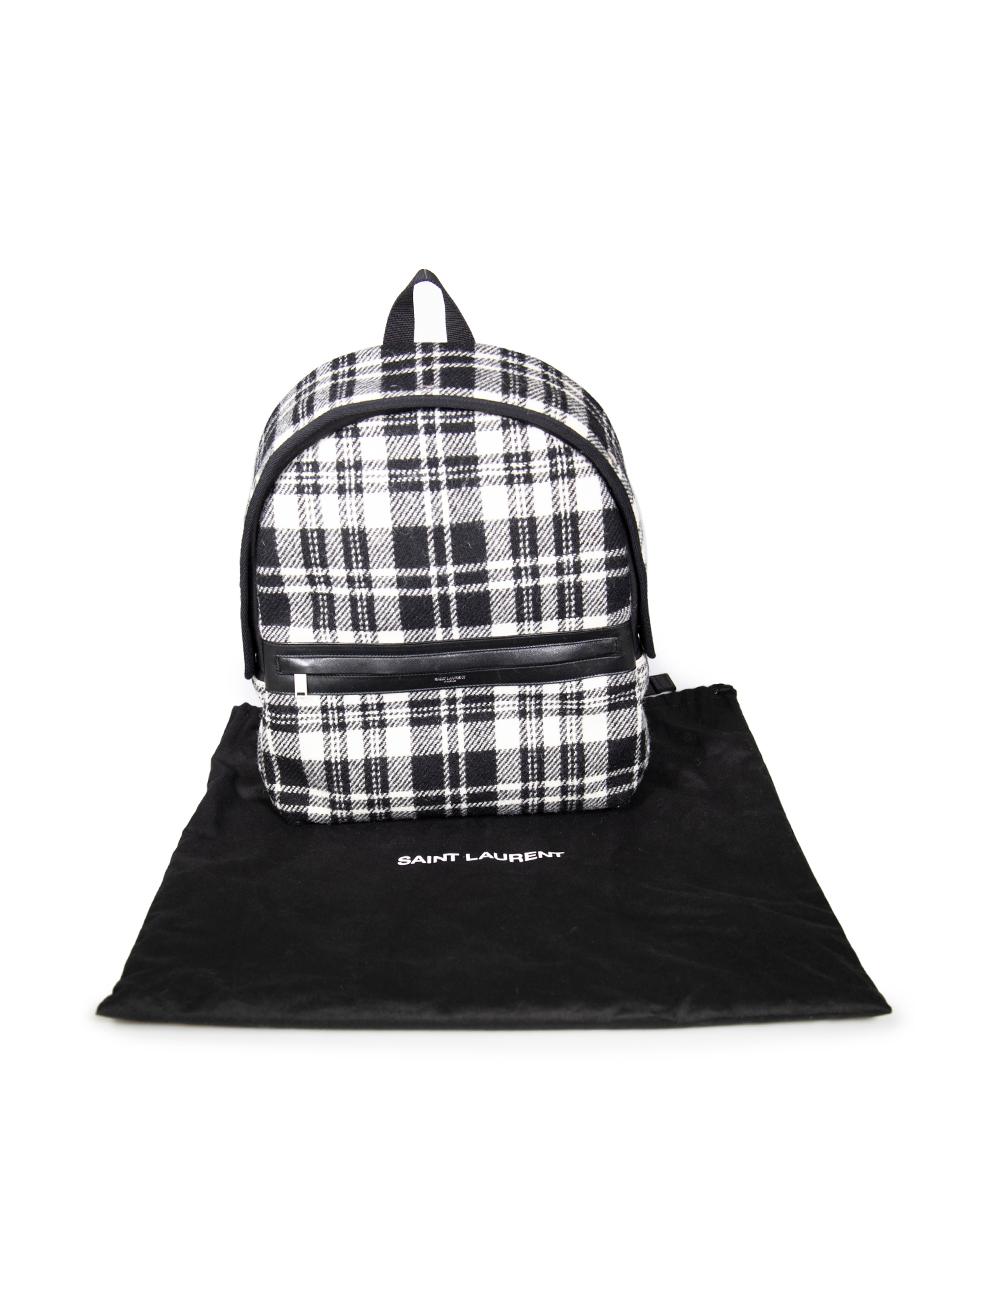 Saint Laurent Black Wool Tartan Pattern City Backpack For Sale 2